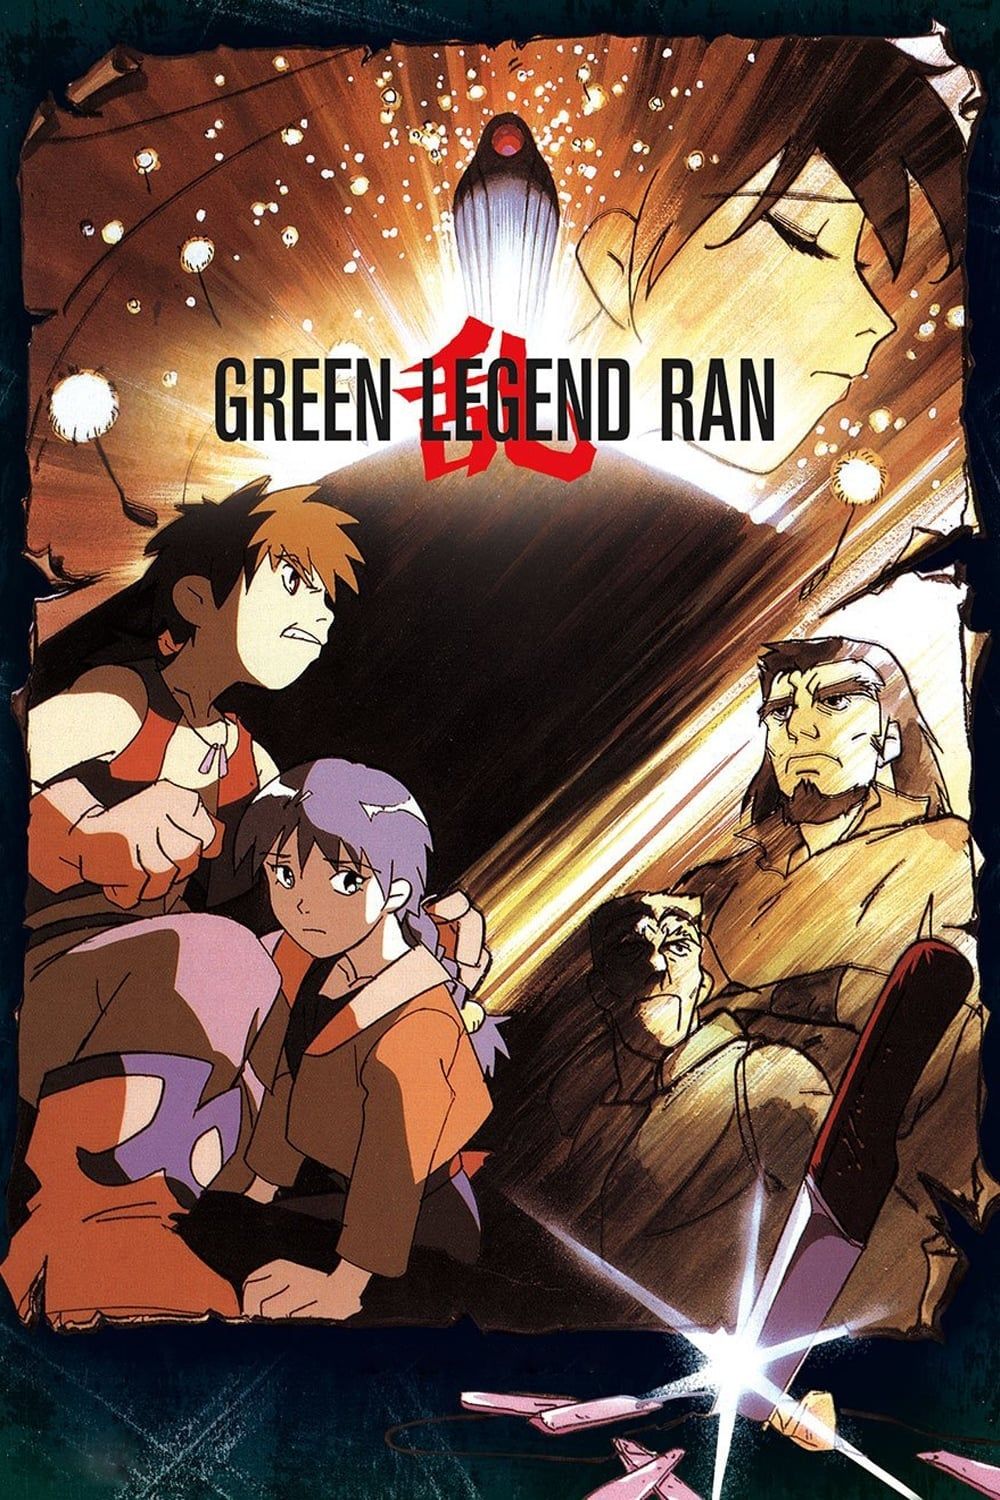 [All Episode] Green Legend Ran (OVA) (Sub)